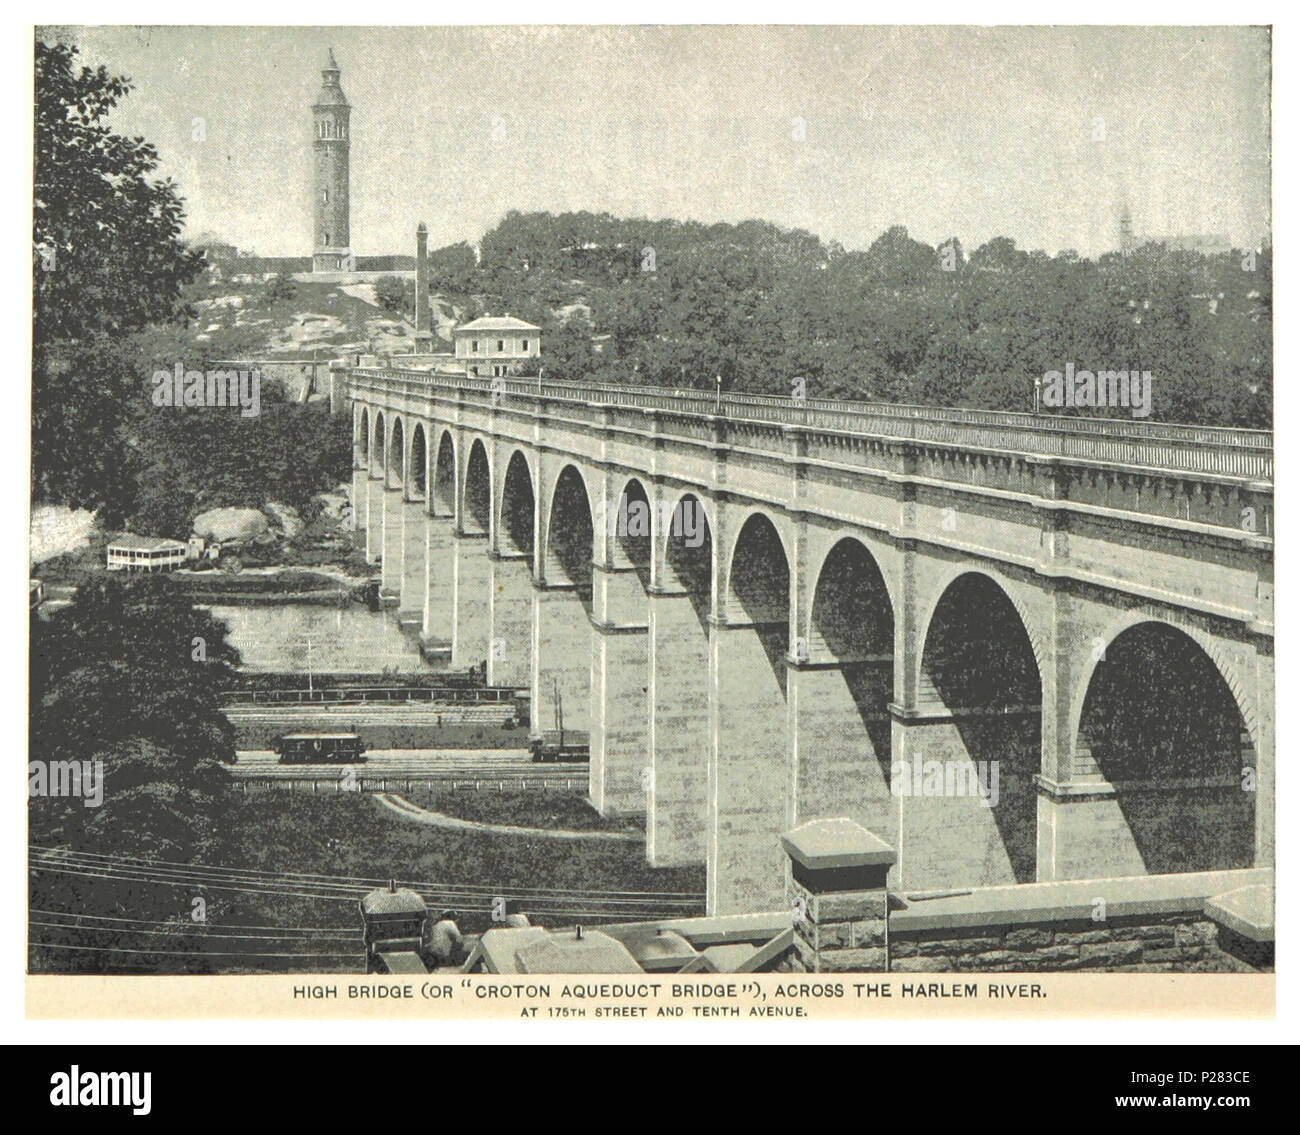 (King1893NYC) pg197 CROTON AQUEDUCT BRIDGE (OR HIGH BRIDGE), ACROSS THE HARLEM RIVER. Stock Photo